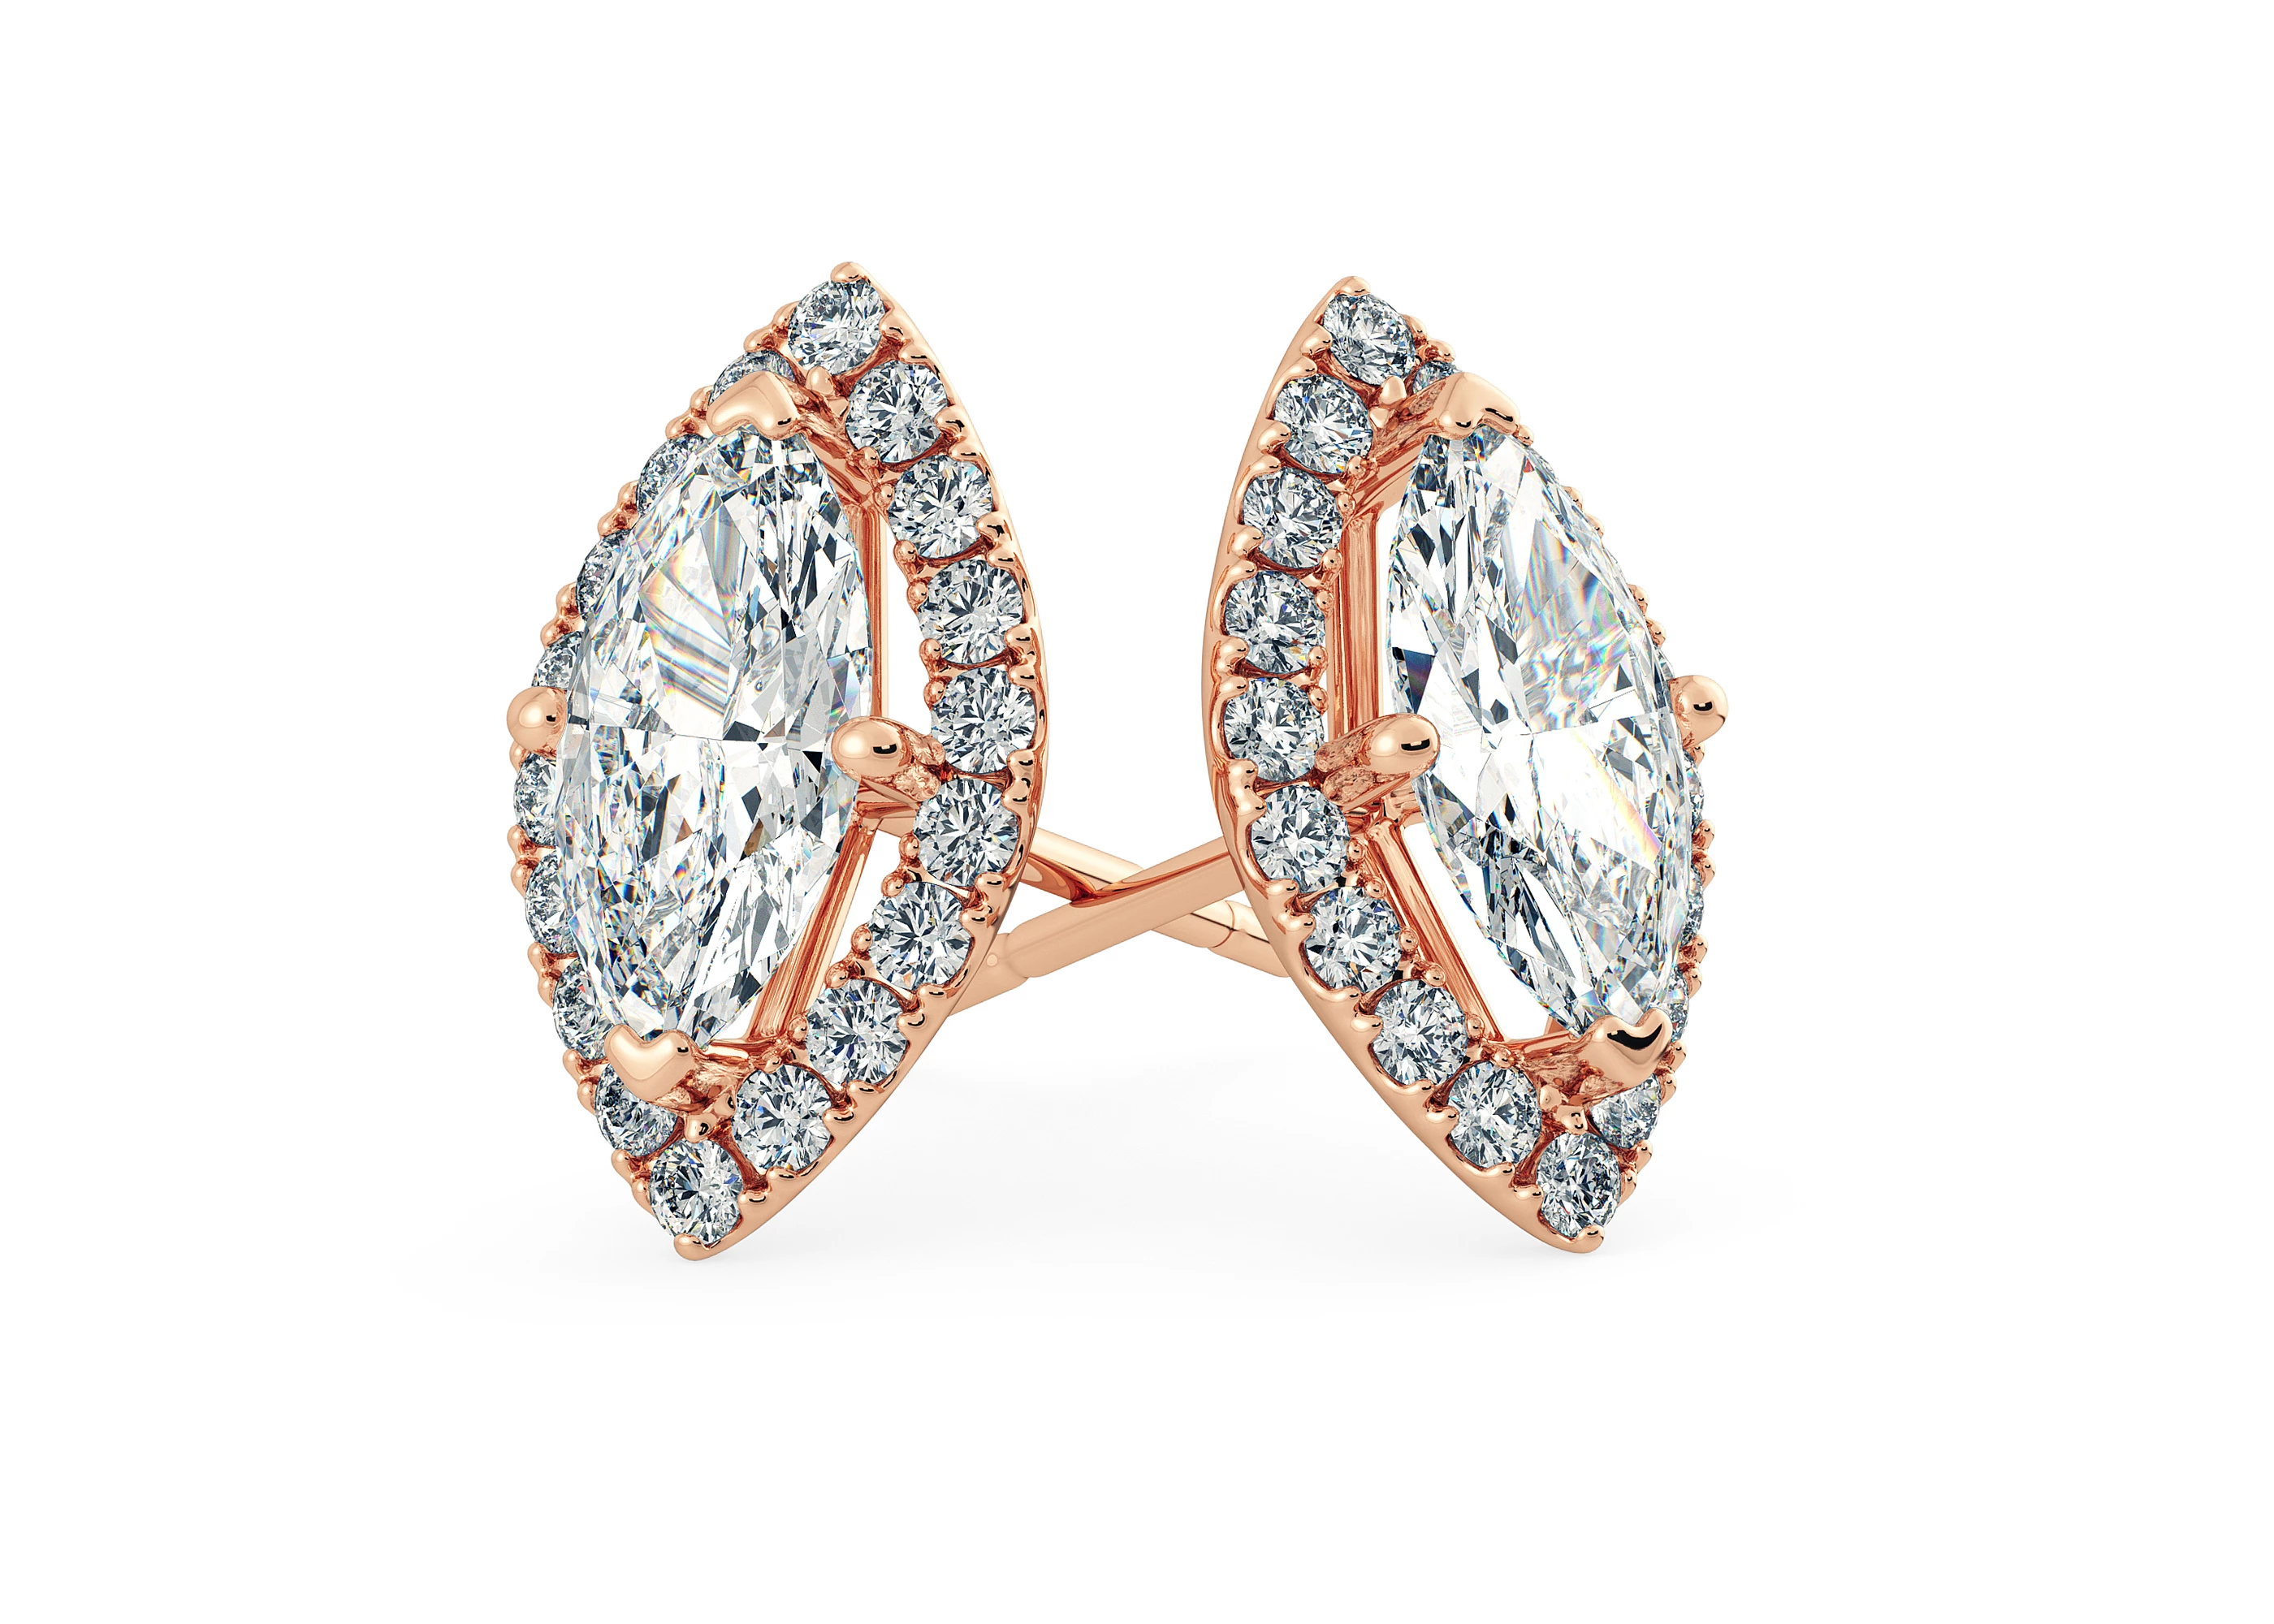 Bijou Marquise Diamond Stud Earrings in 18K Rose Gold with Butterfly Backs